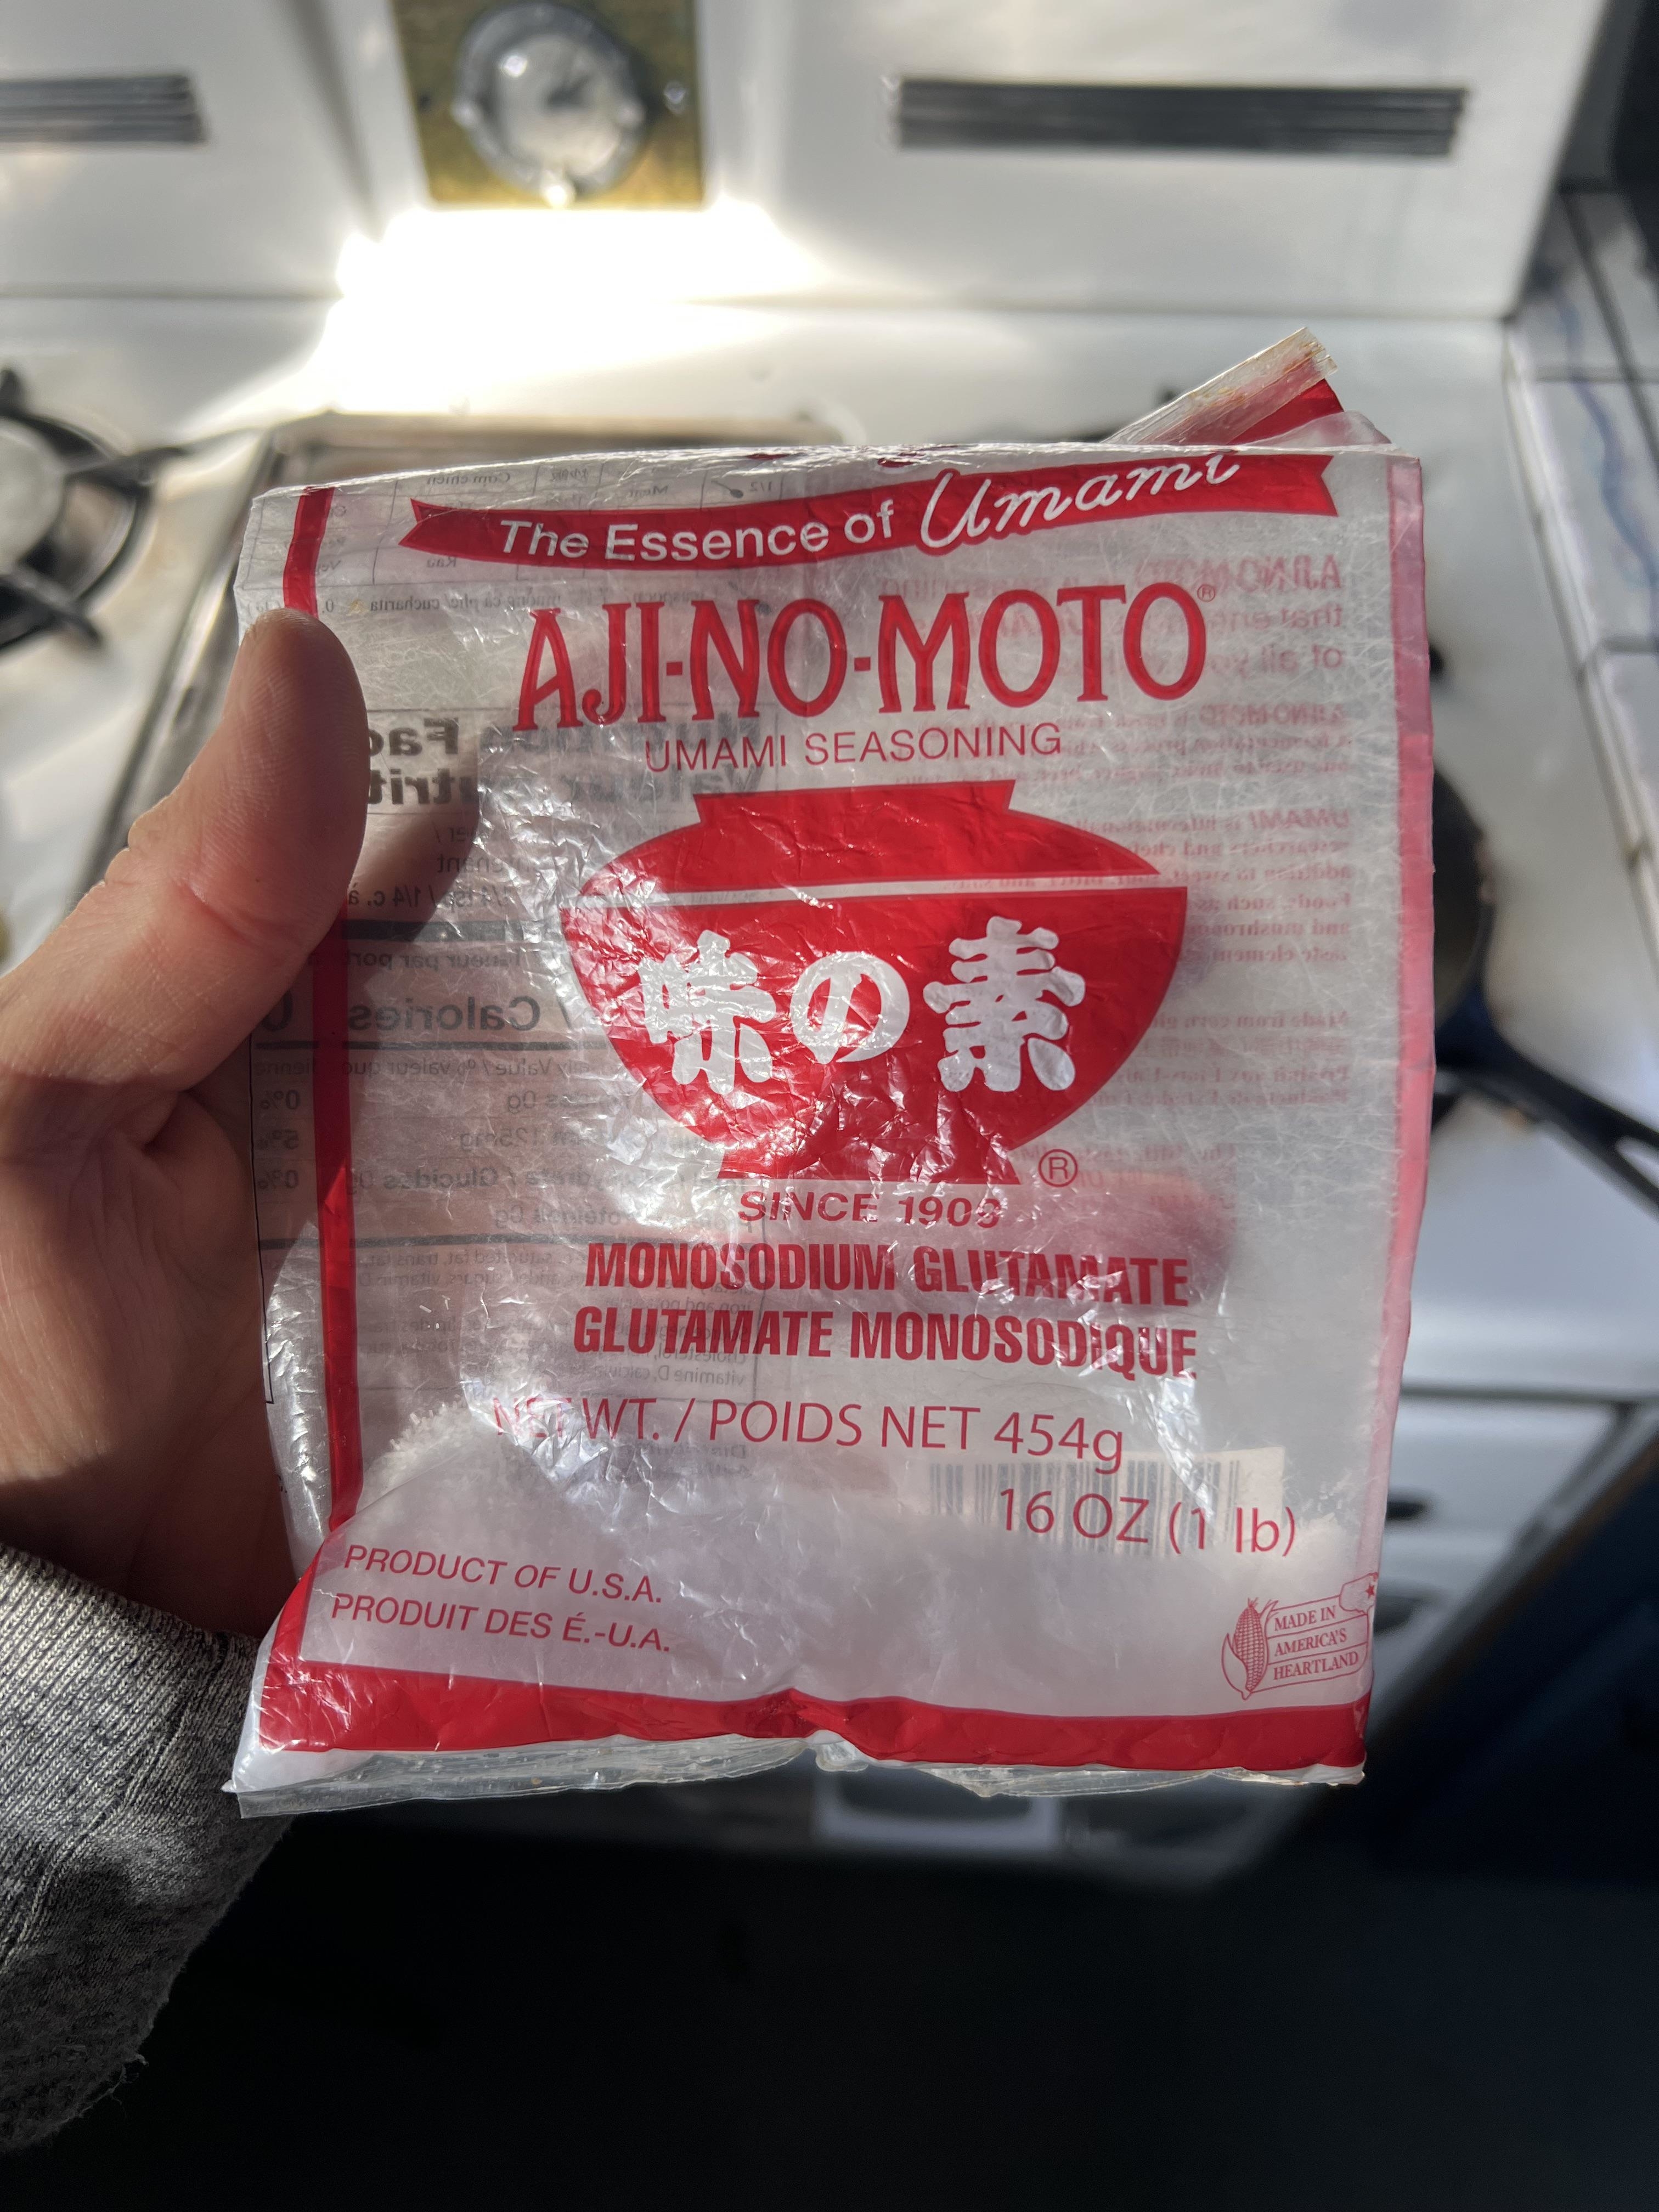 A hand holding a crumpled bag of umami seasoning made of monosodium glutamate